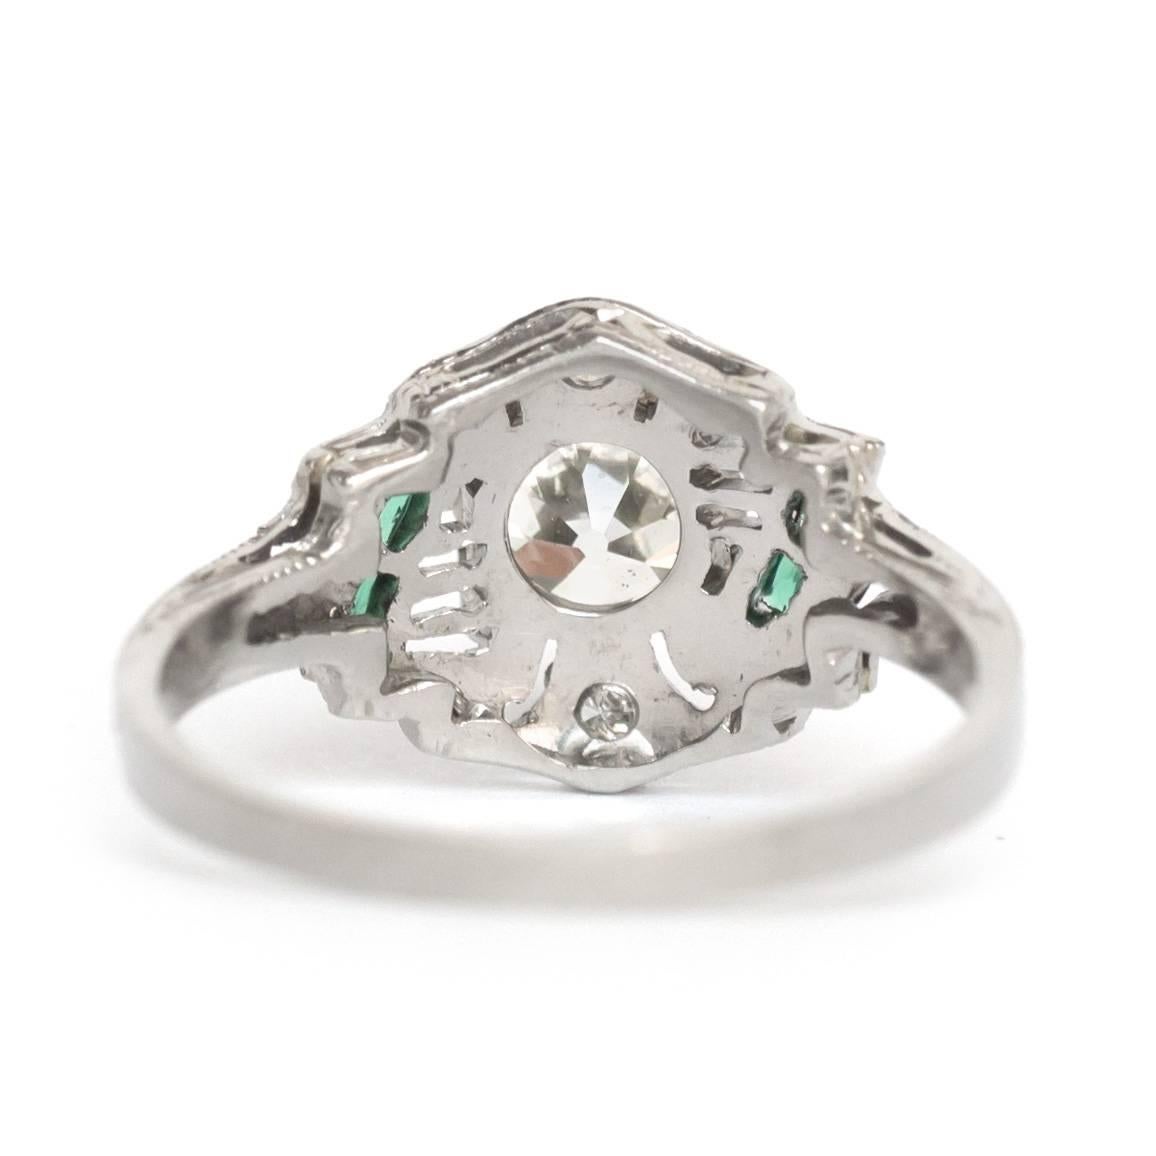 Women's 1920s Art Deco White Gold GIA Certified Old European Brilliant Cut Diamond Ring